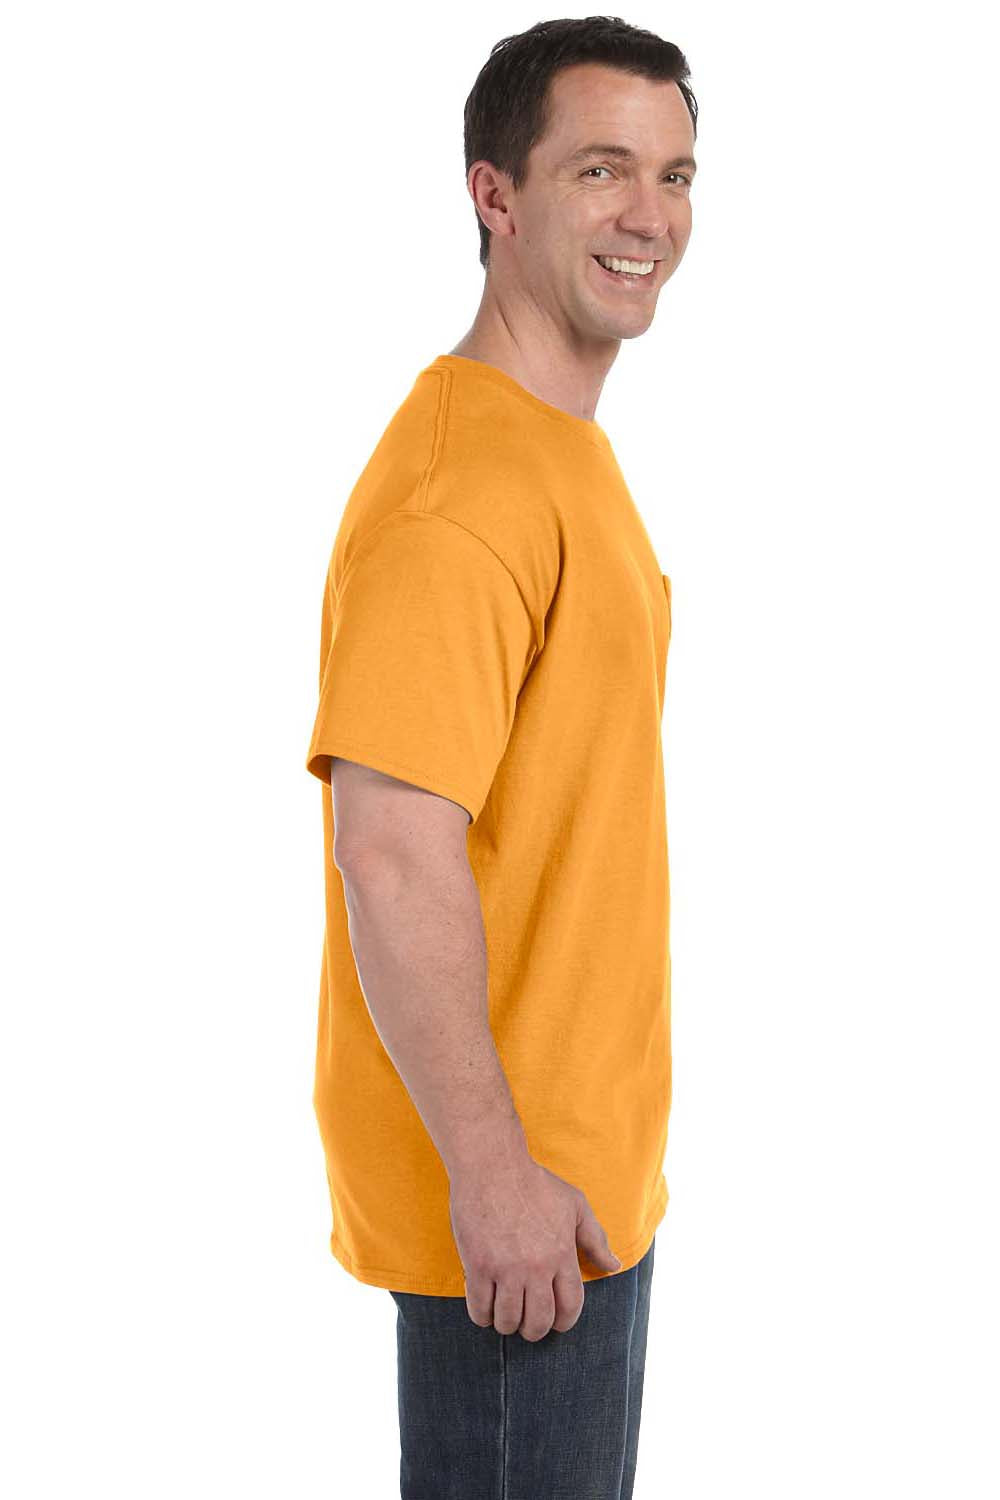 Hanes H5590 Mens ComfortSoft Short Sleeve Crewneck T-Shirt w/ Pocket Gold Side